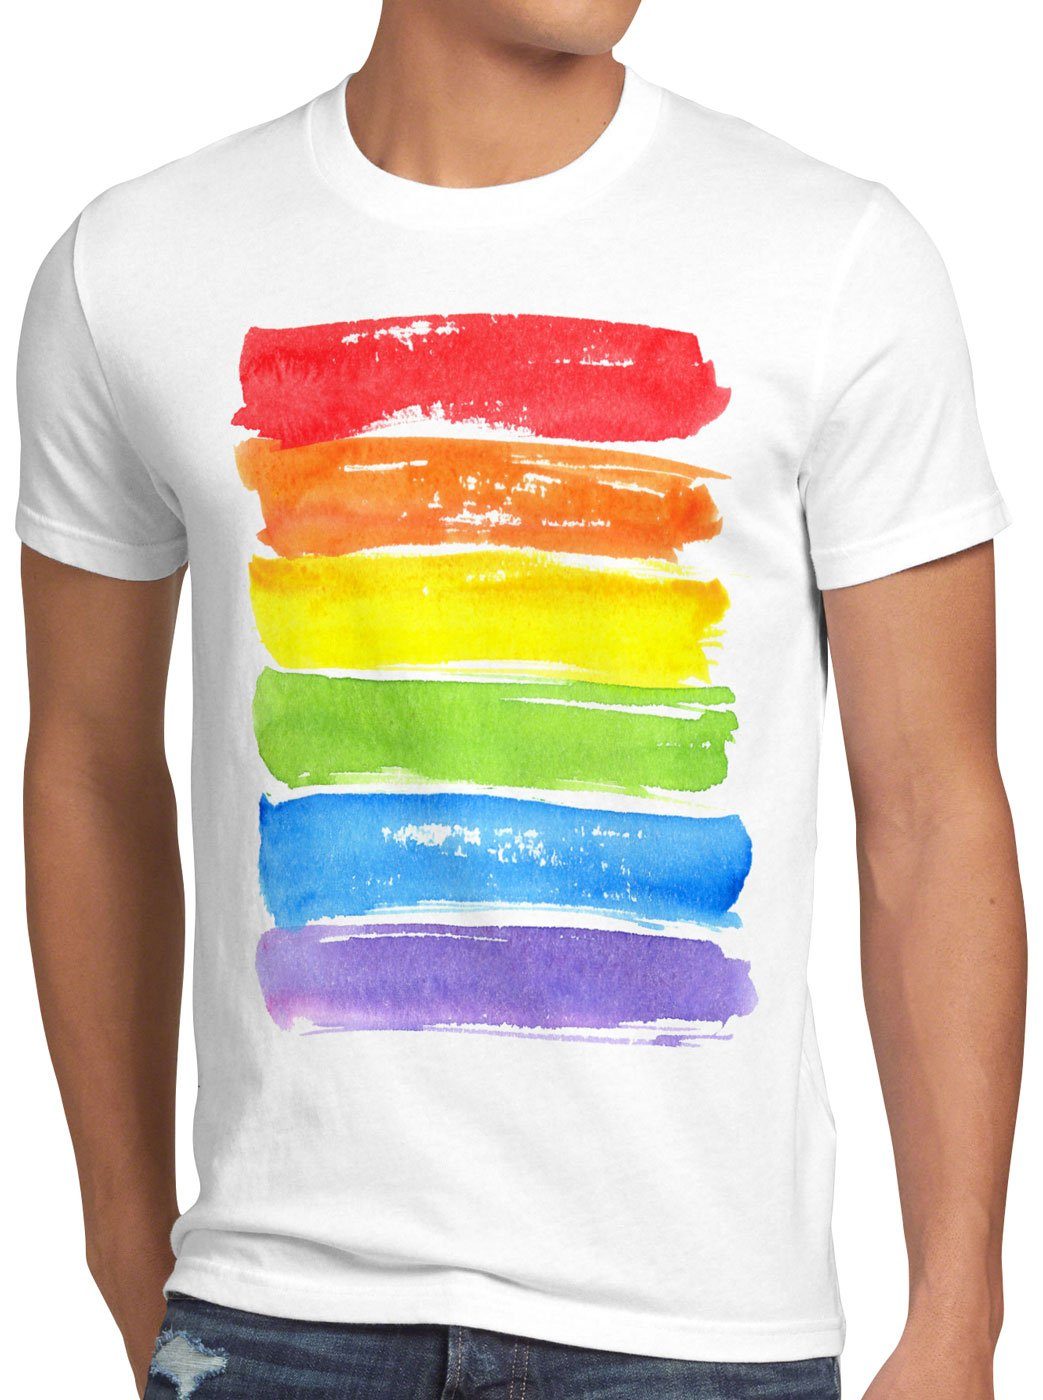 Print-Shirt liebe style3 T-Shirt Herren toleranz Regenbogenflagge lgbt